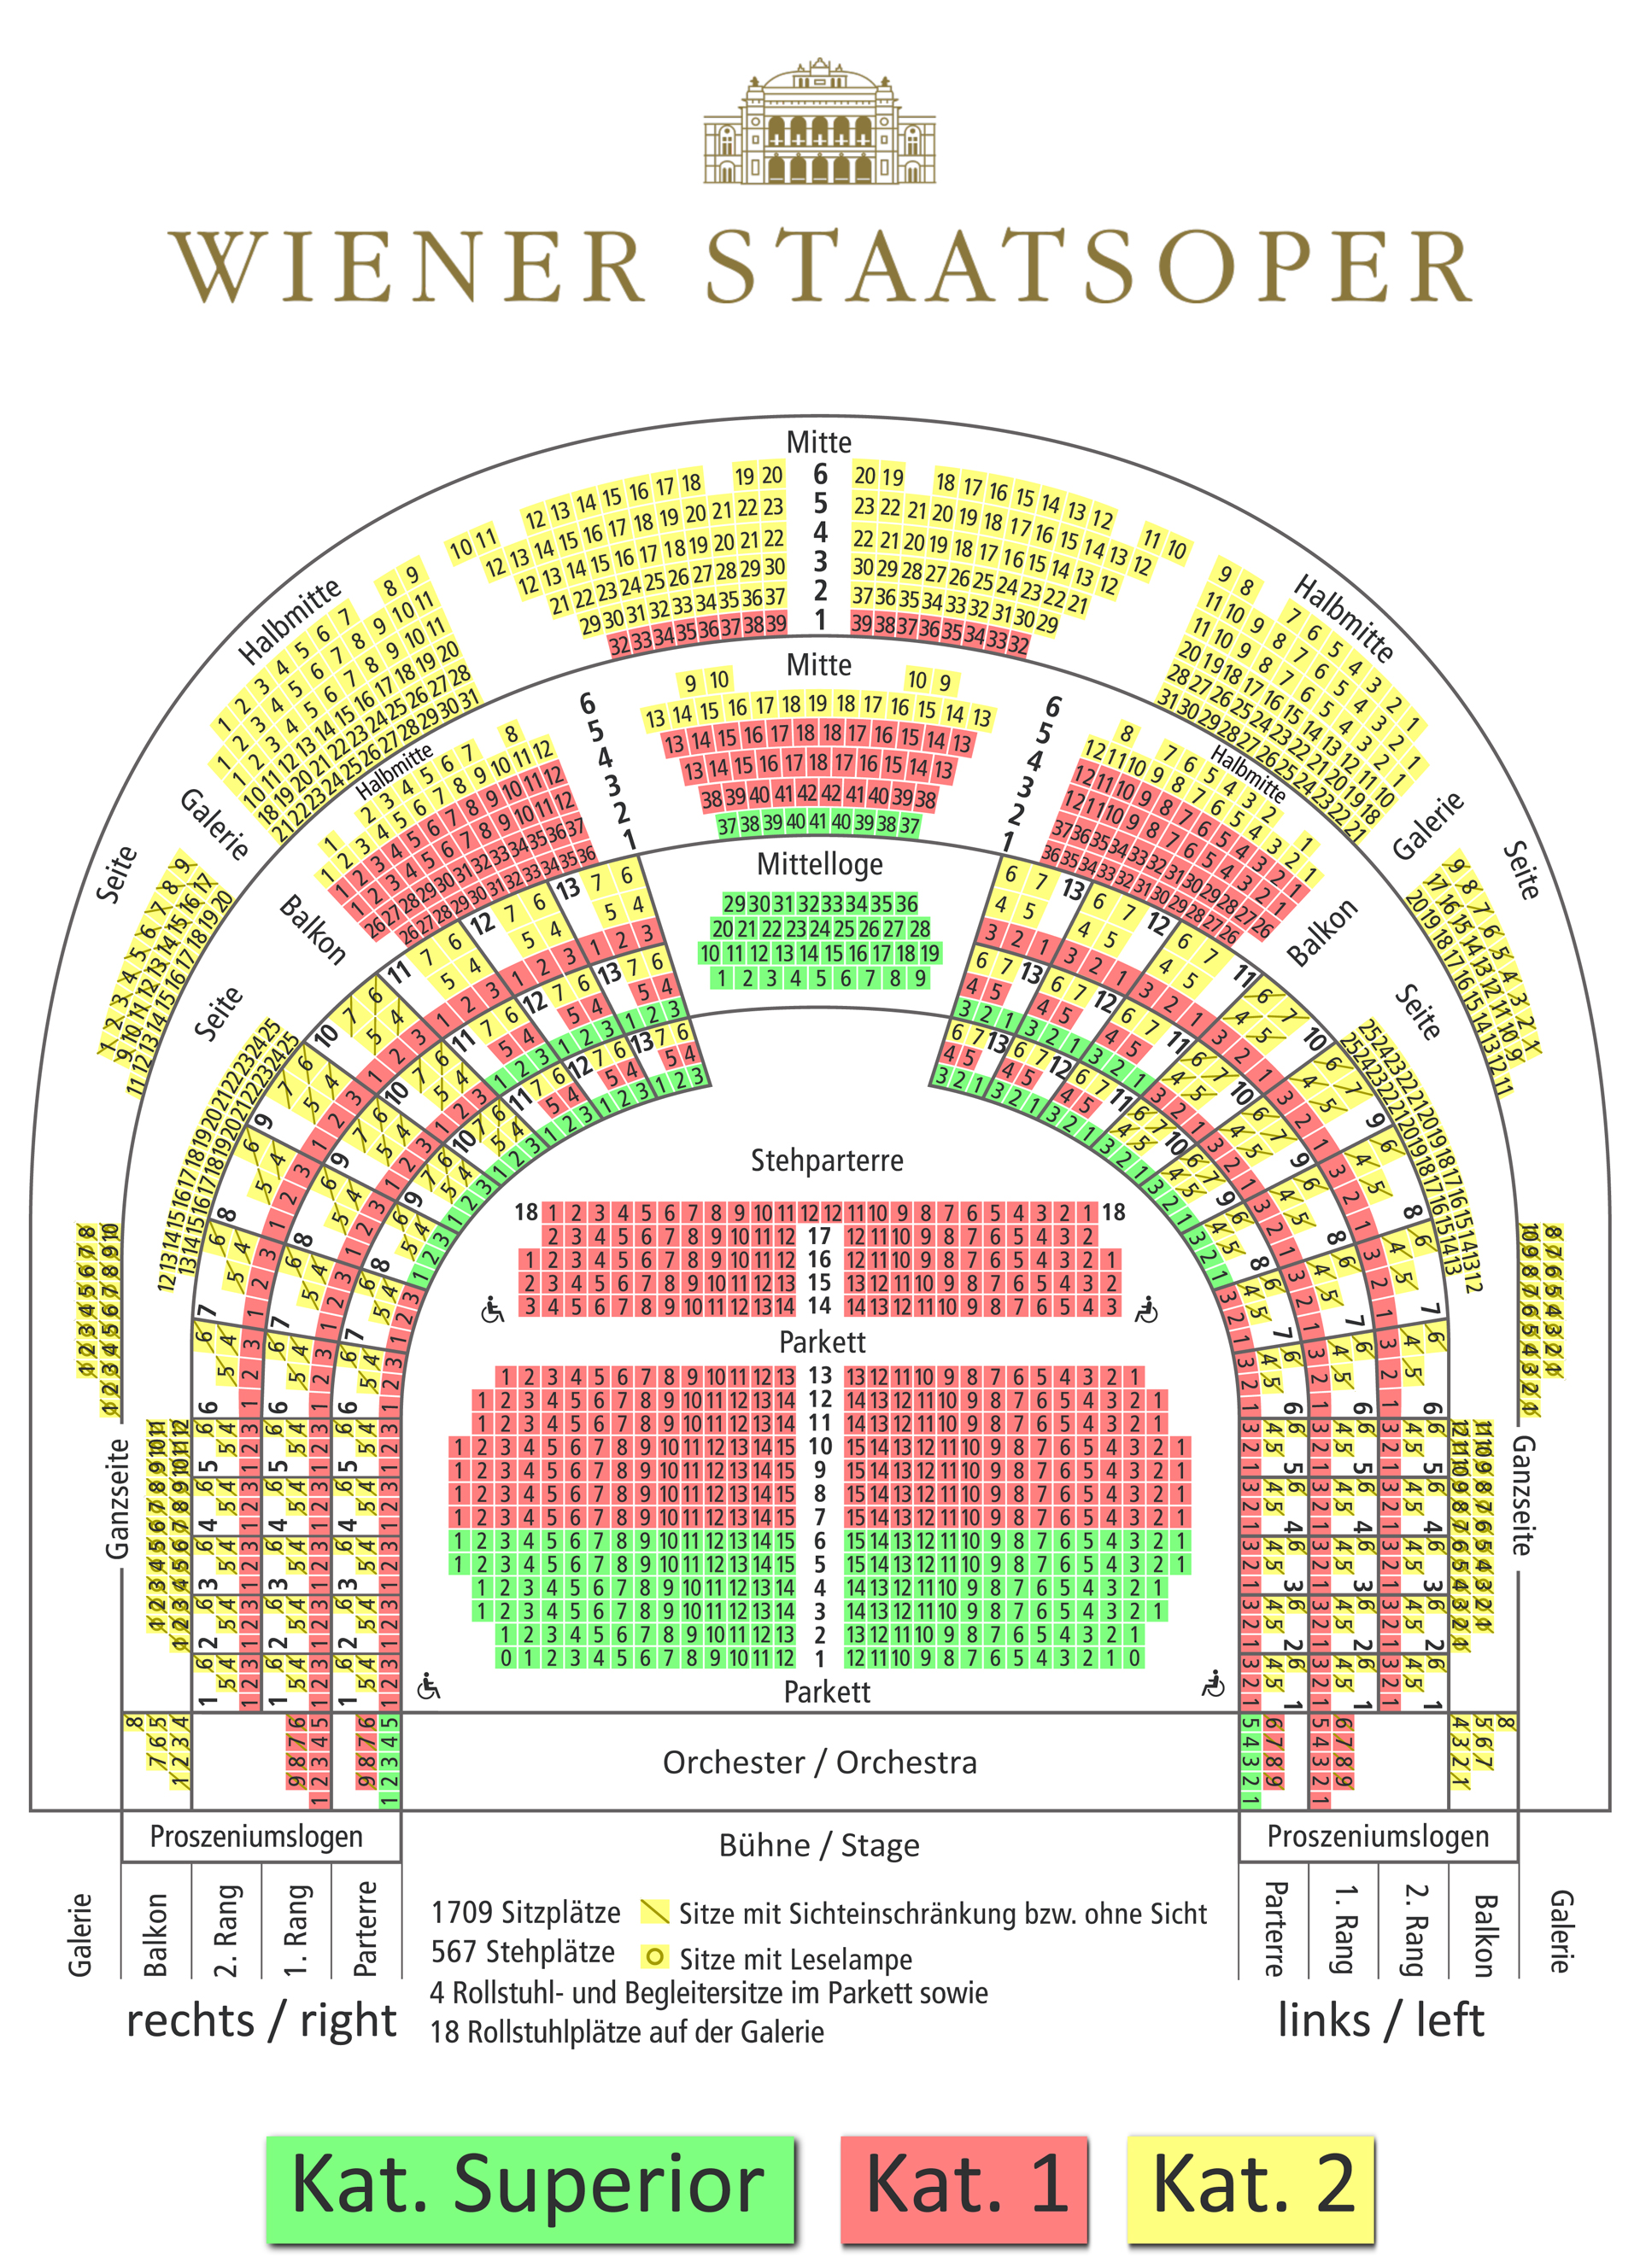 Wiener Staatsoper Seating Chart